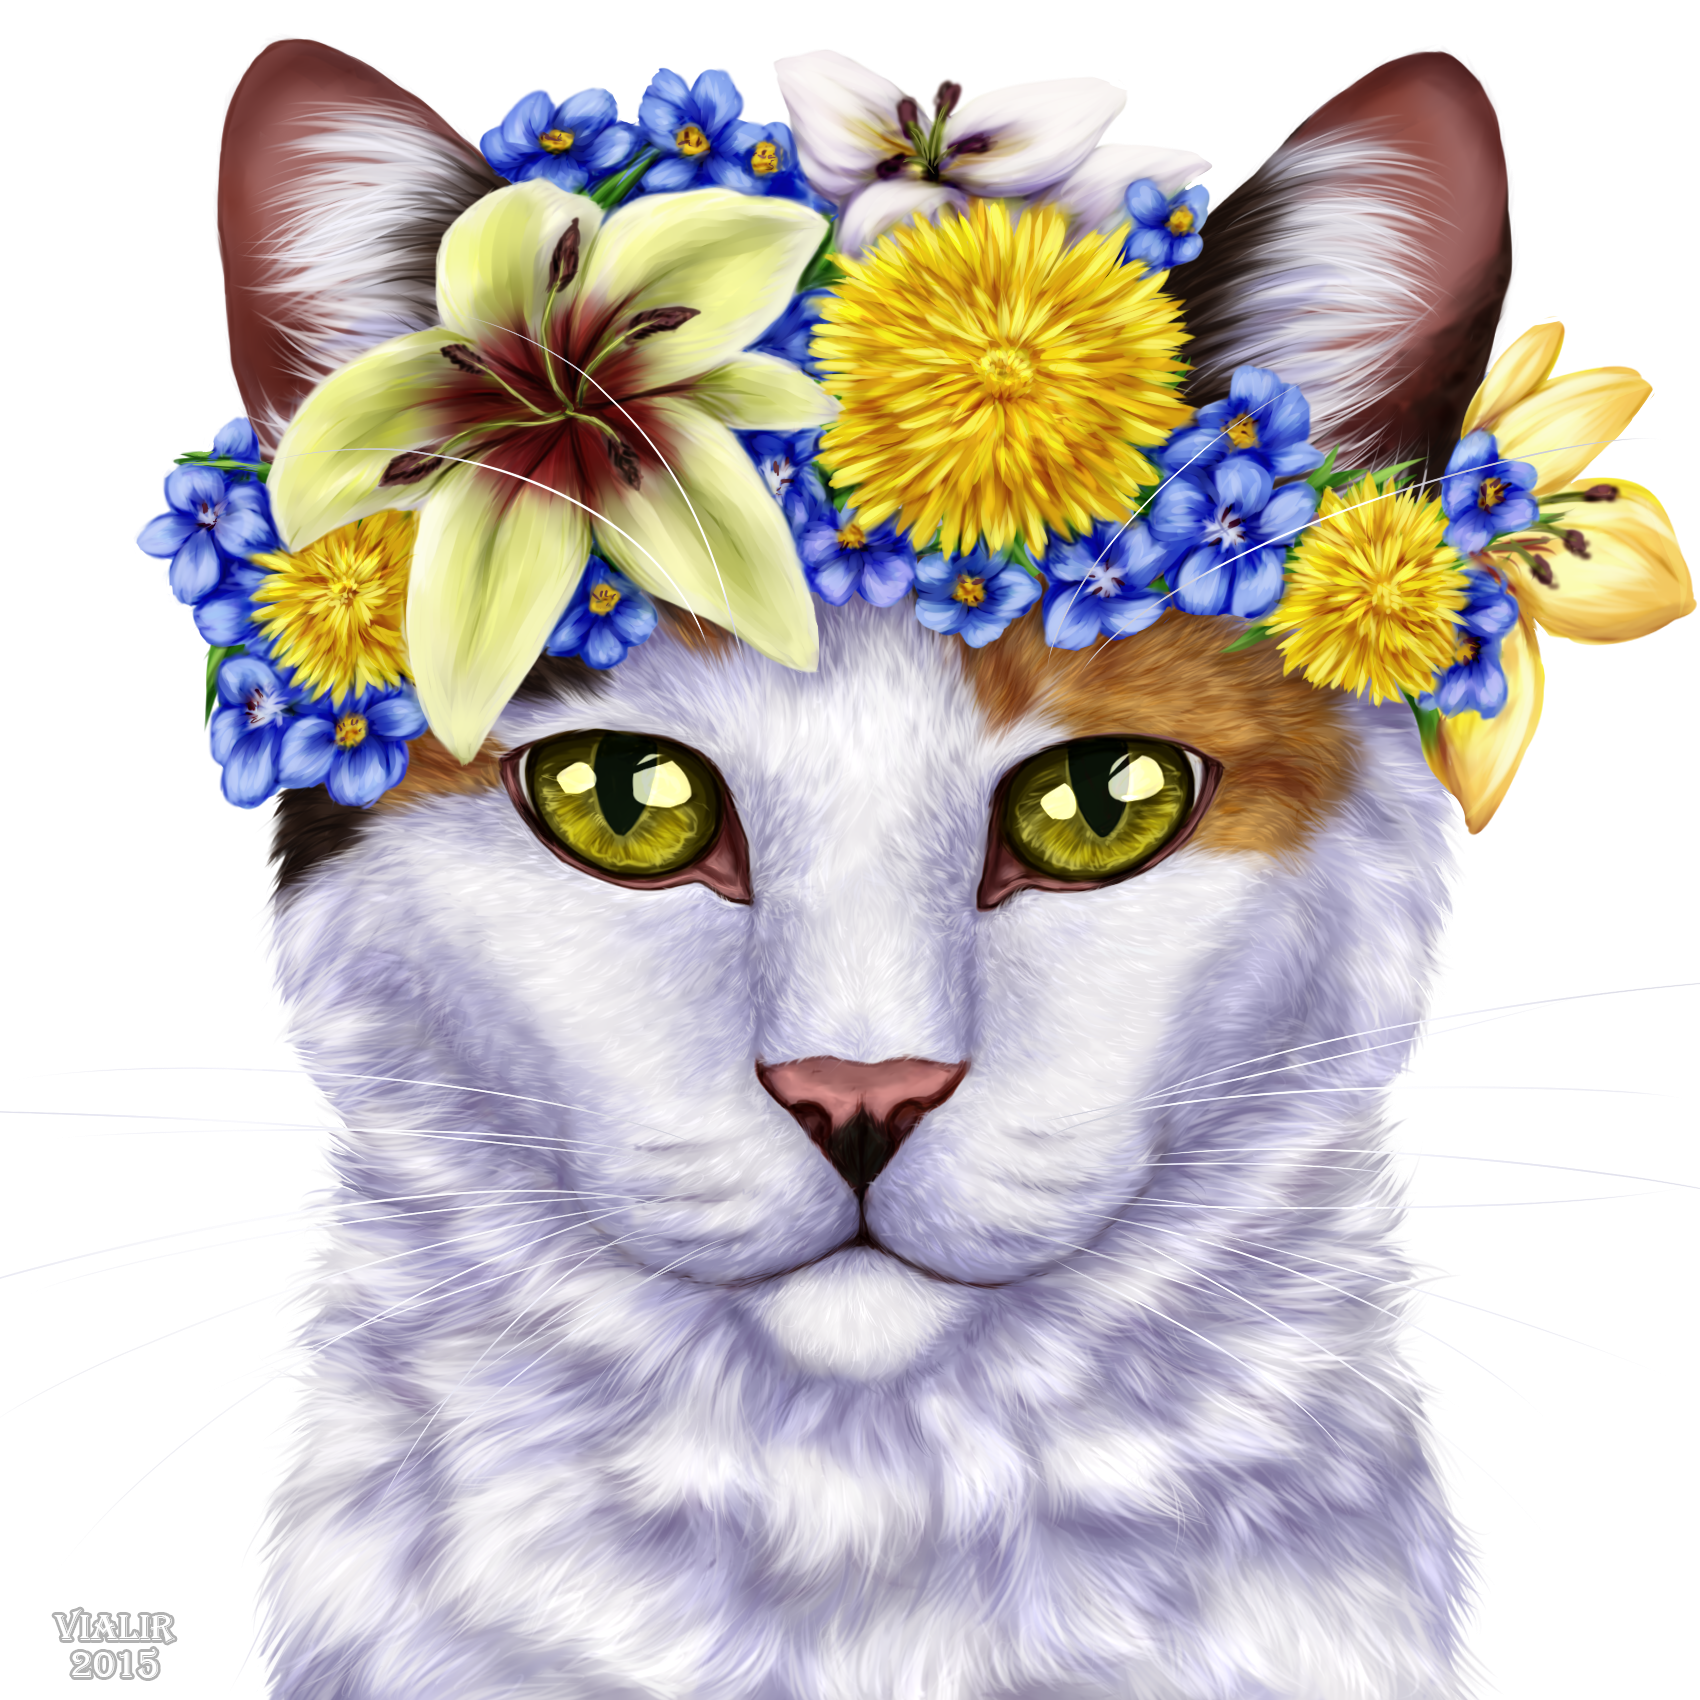 Кошка с венком. Кошка с венком на голове. Кот в цветах арт. Котик в венке из цветов. Рисунок кота с цветами